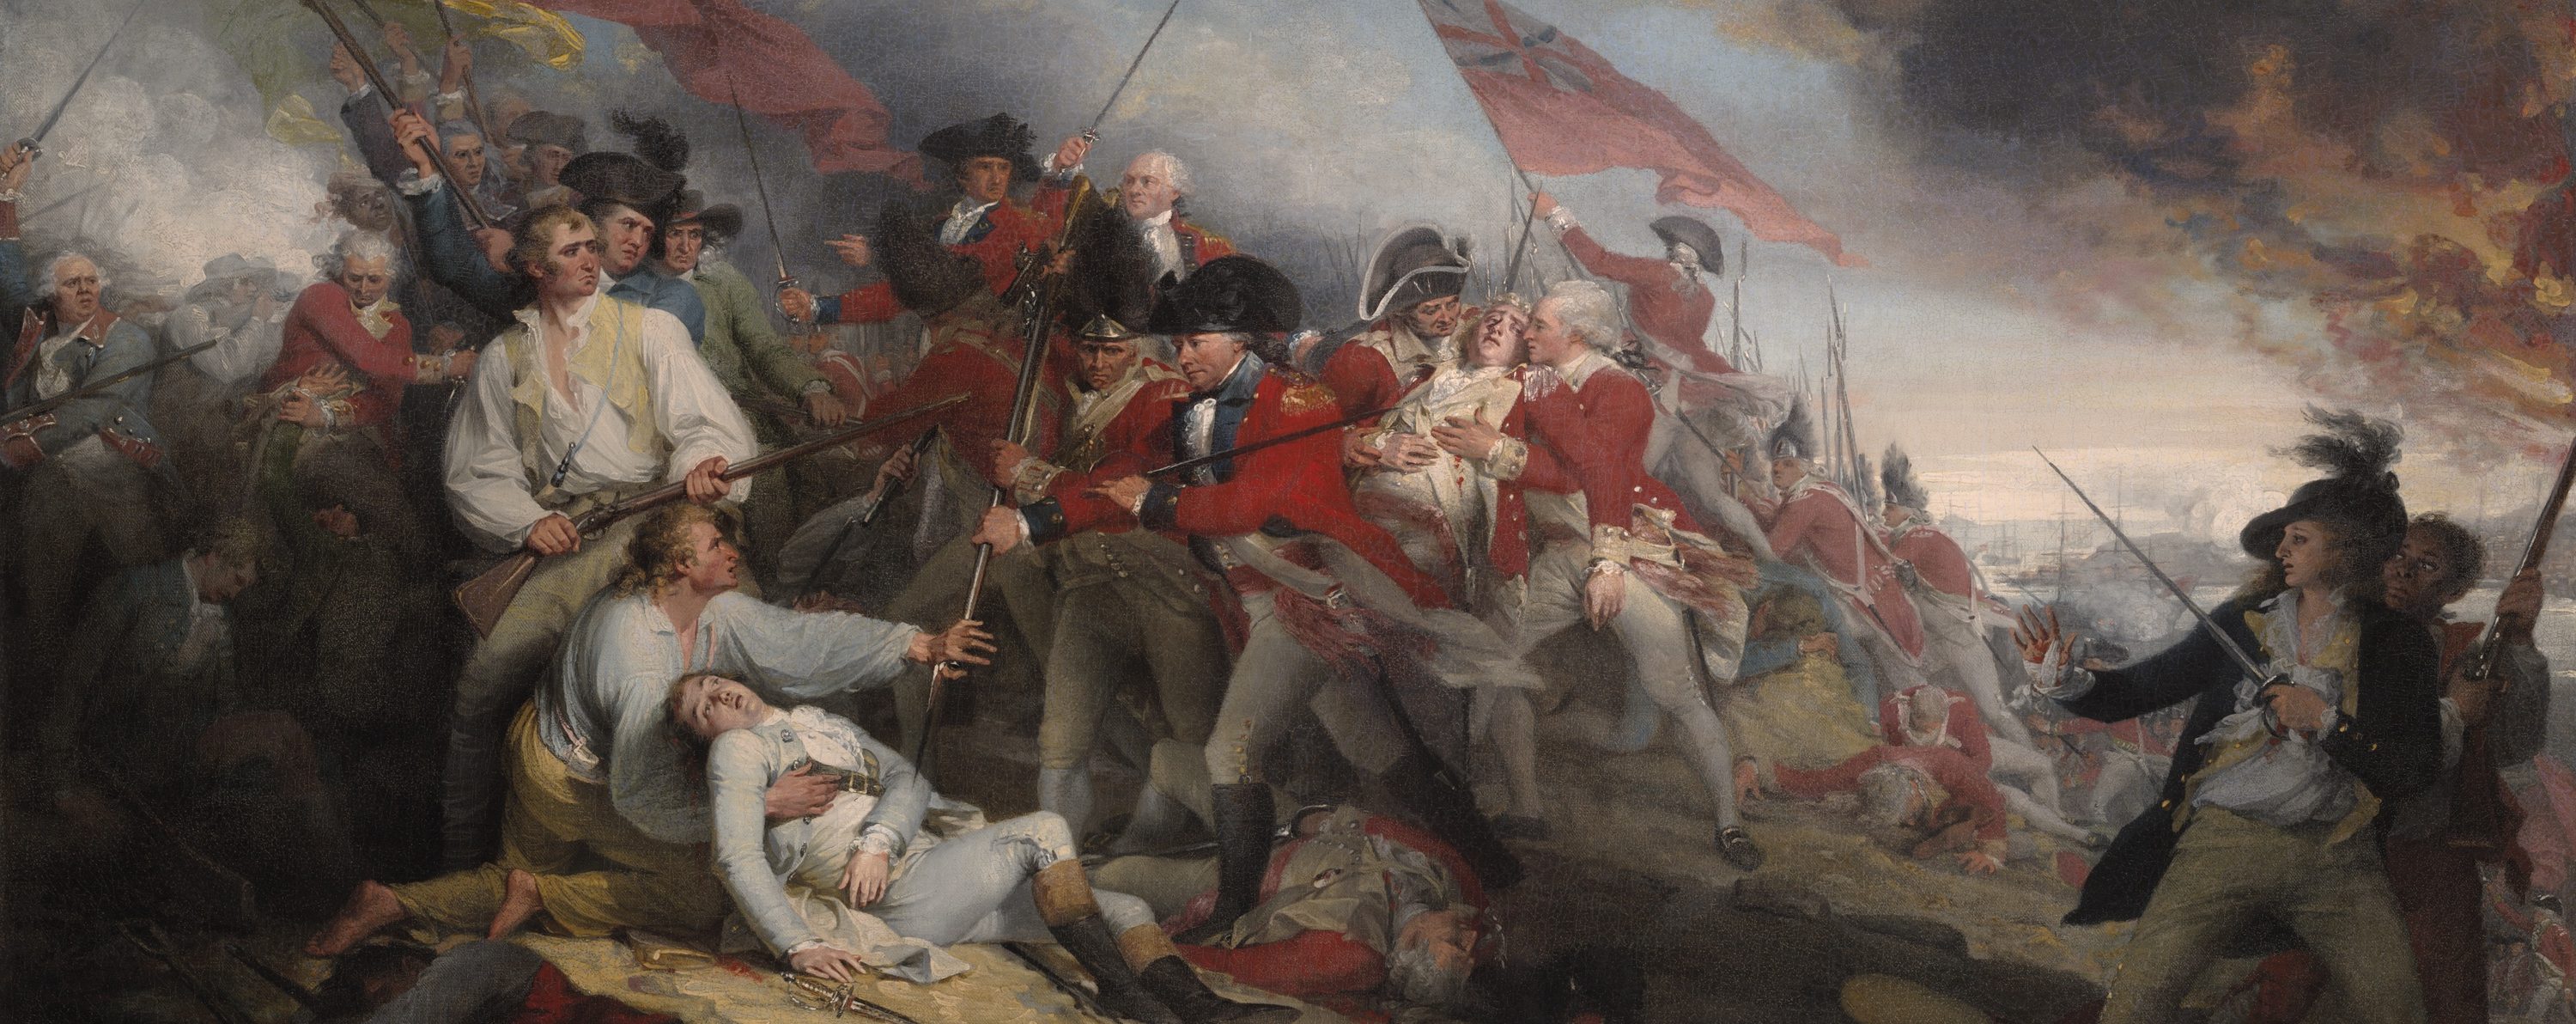 4 The Death of General Warren at Bunker’s Hill, June 17, 1775 by John Trumbull